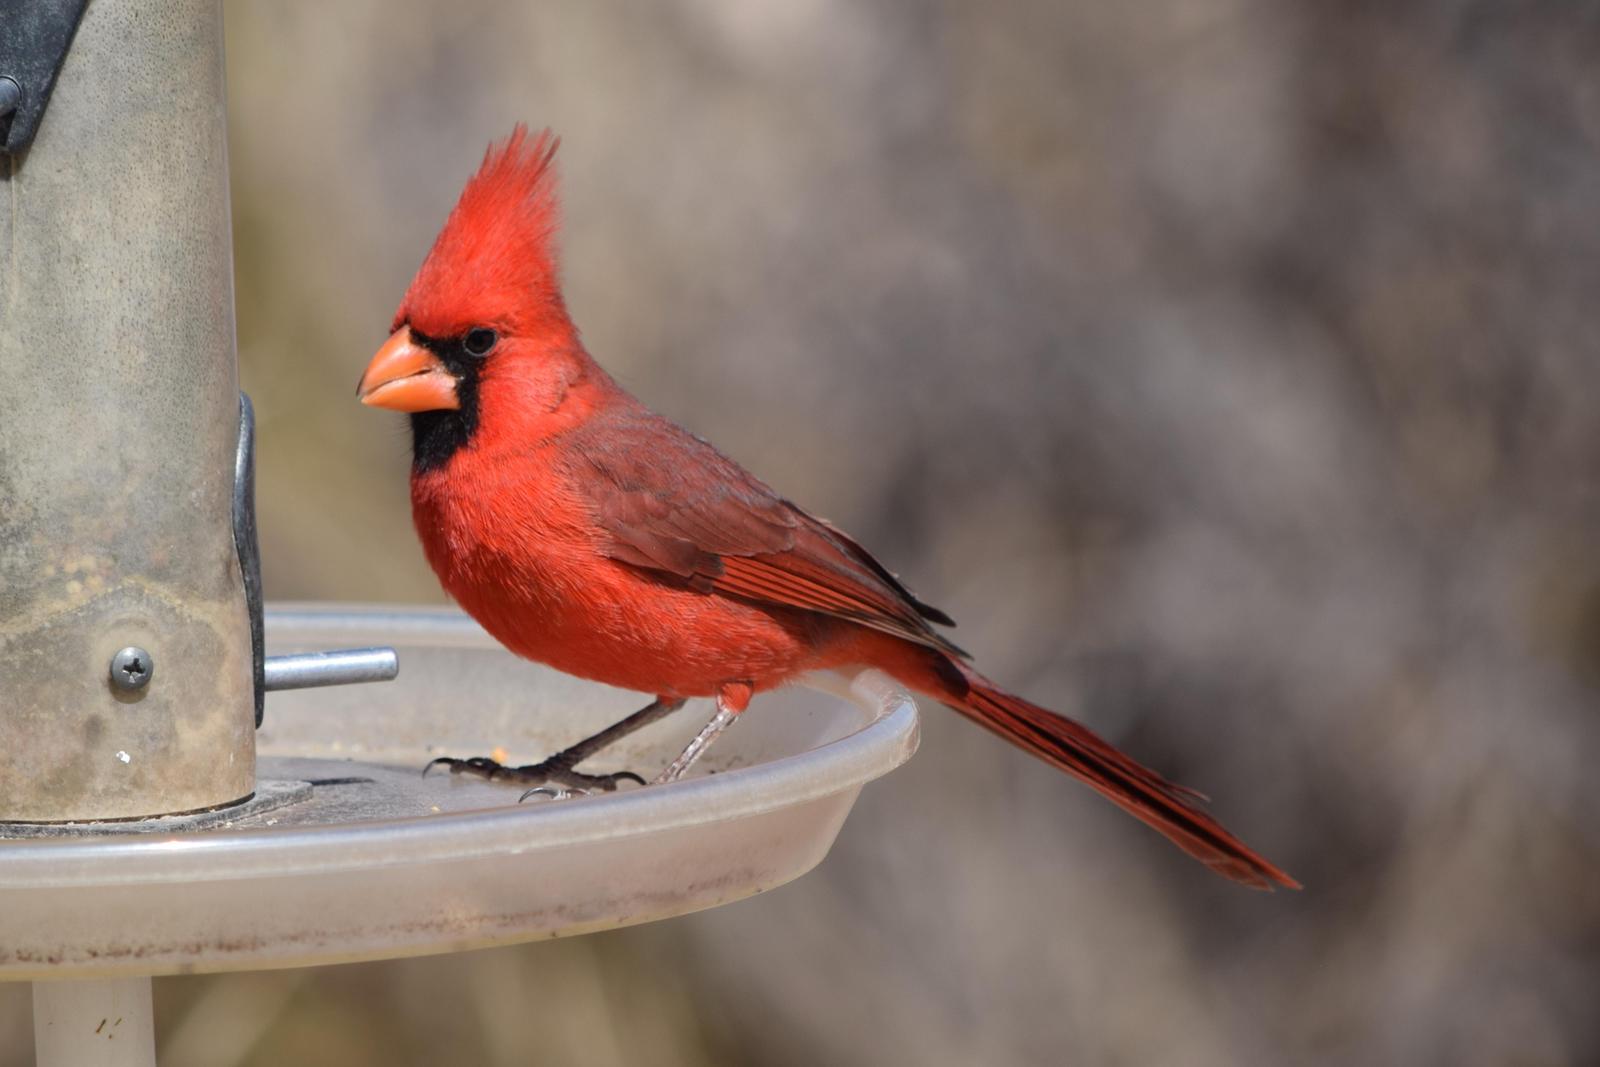 Northern Cardinal Photo by Ken Shawcroft